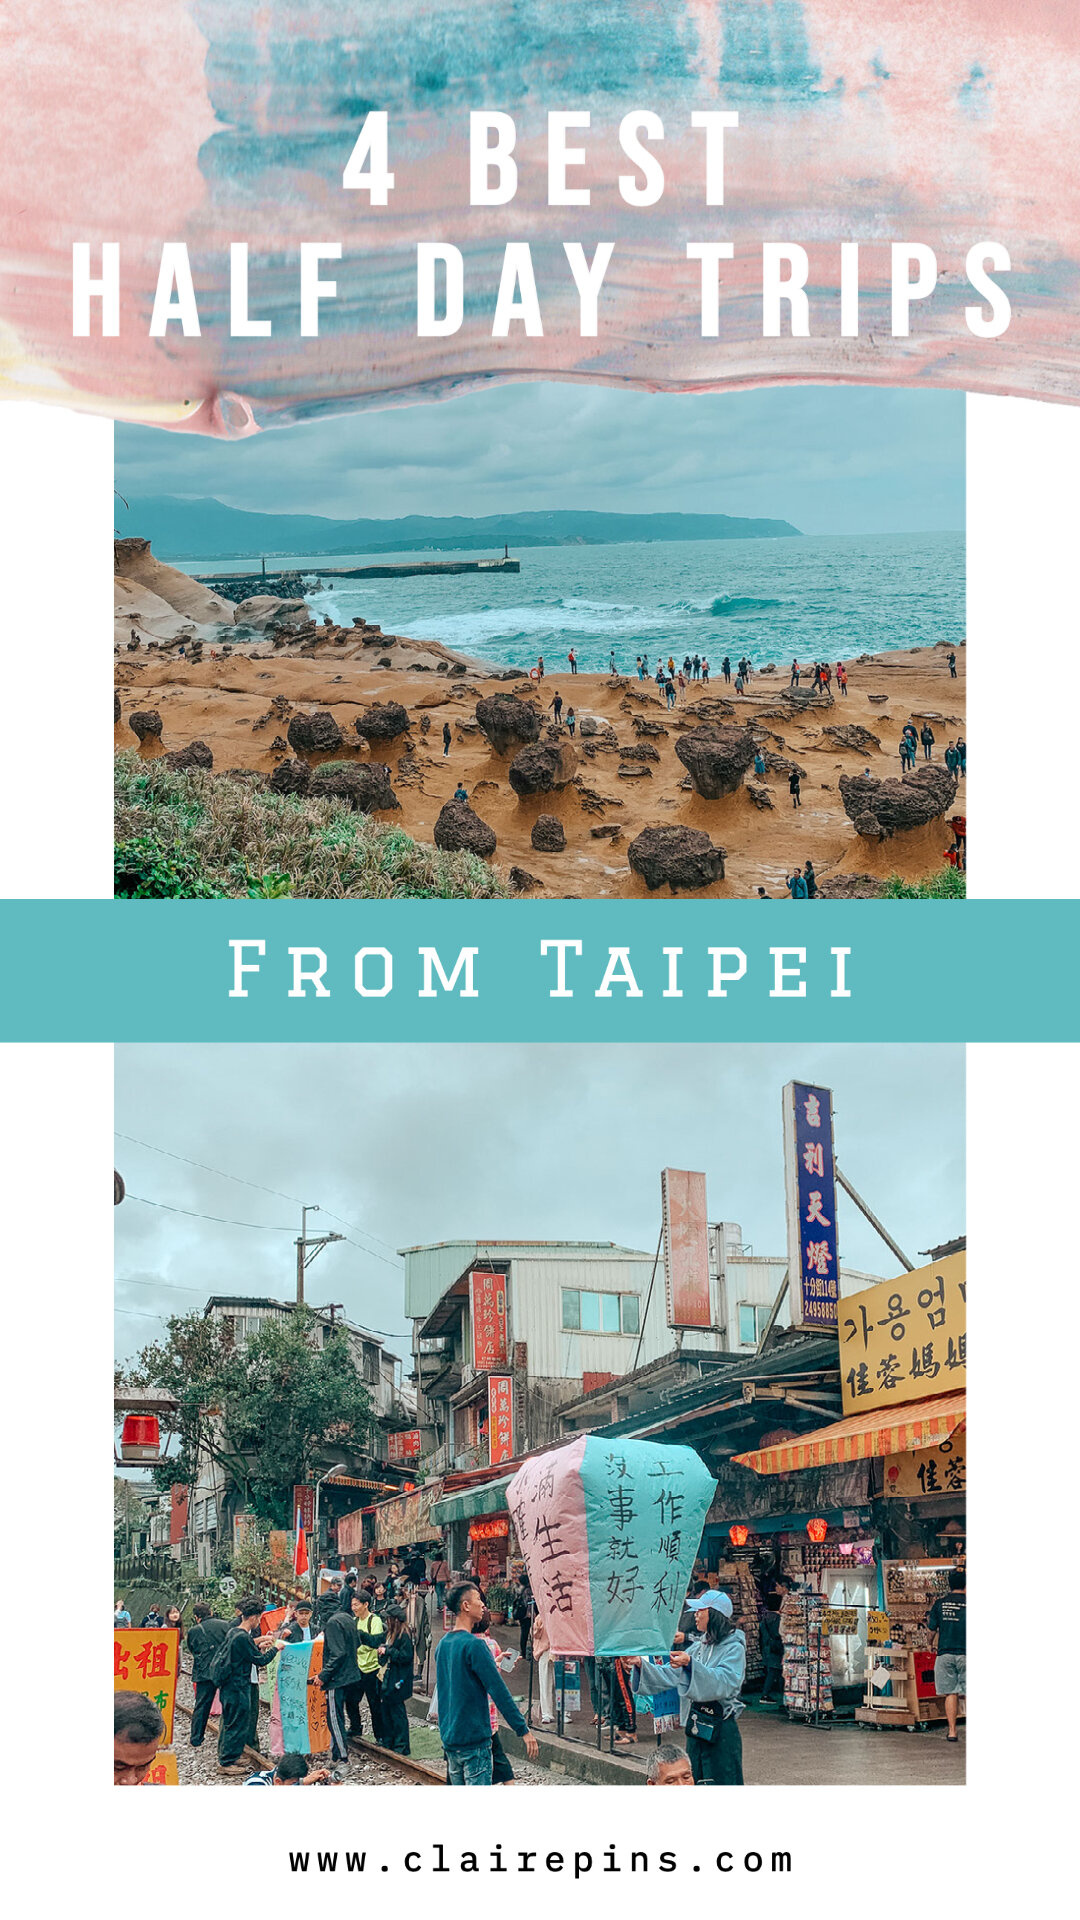 4 Best Half Day Trips from Taipei in Taiwan copy 3.jpg